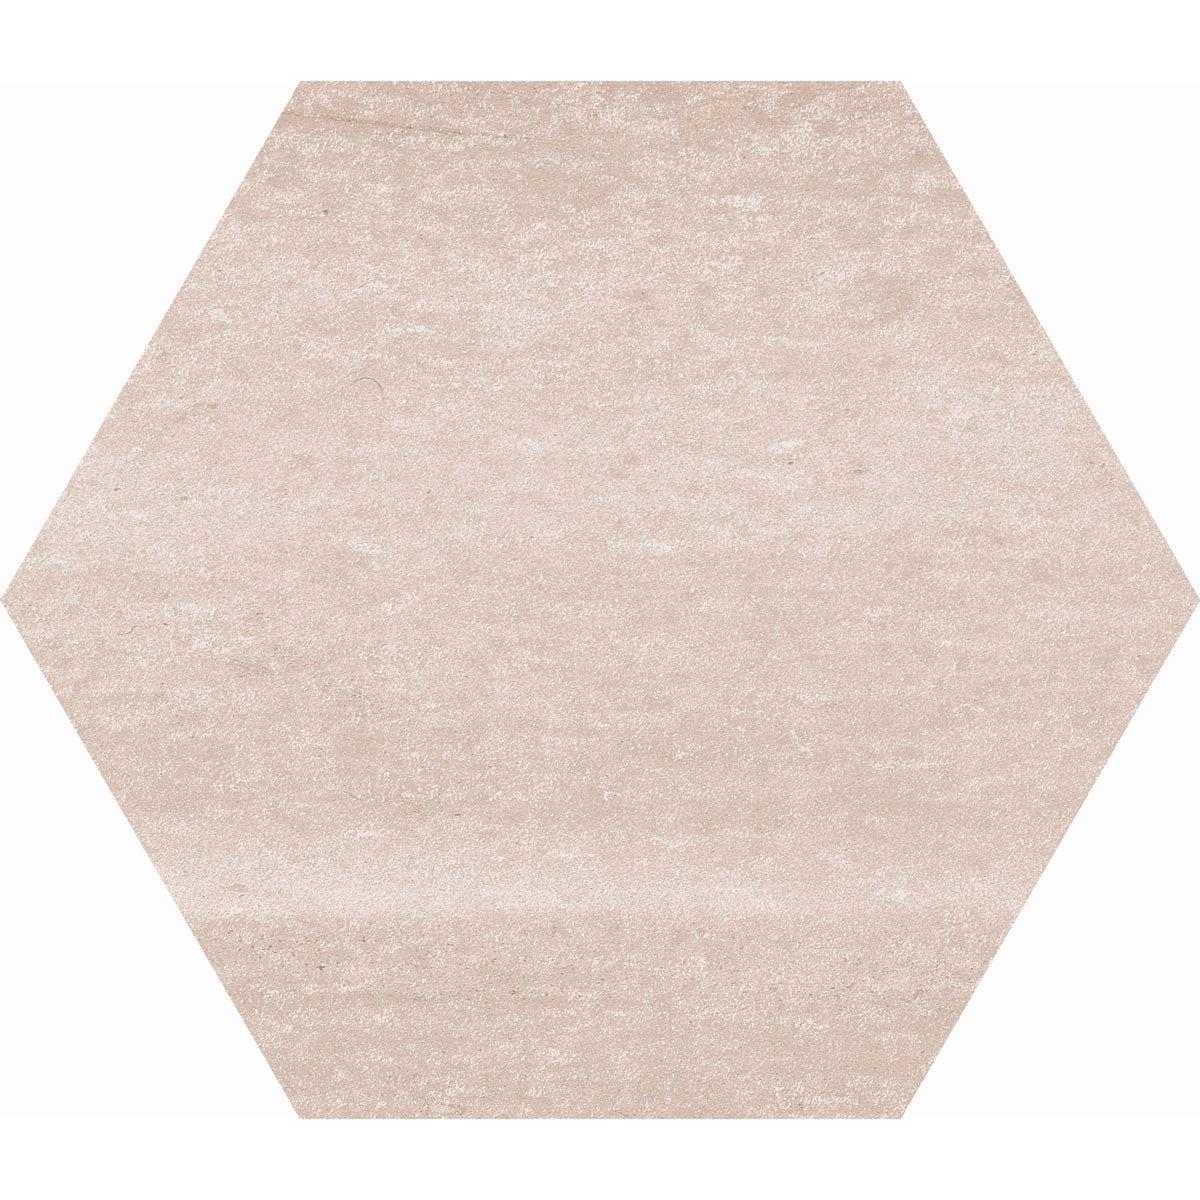 Sola Wheat Hexagon Porcelain Tile 7x8